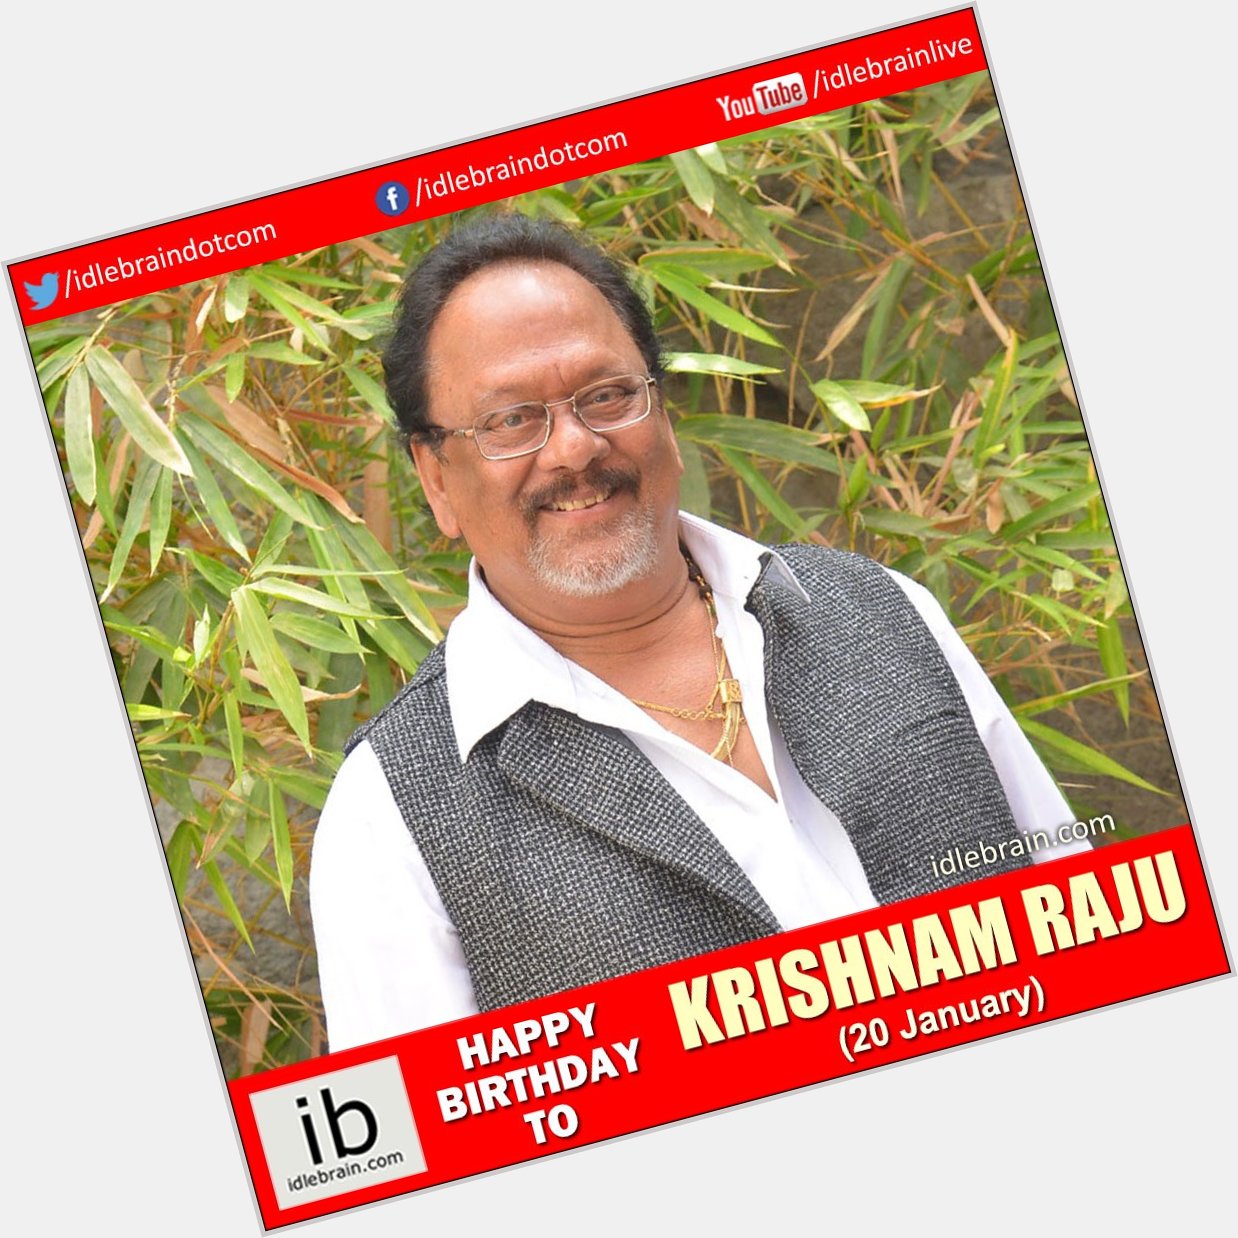 Happy Birthday to Krishnam Raju (20 January) 